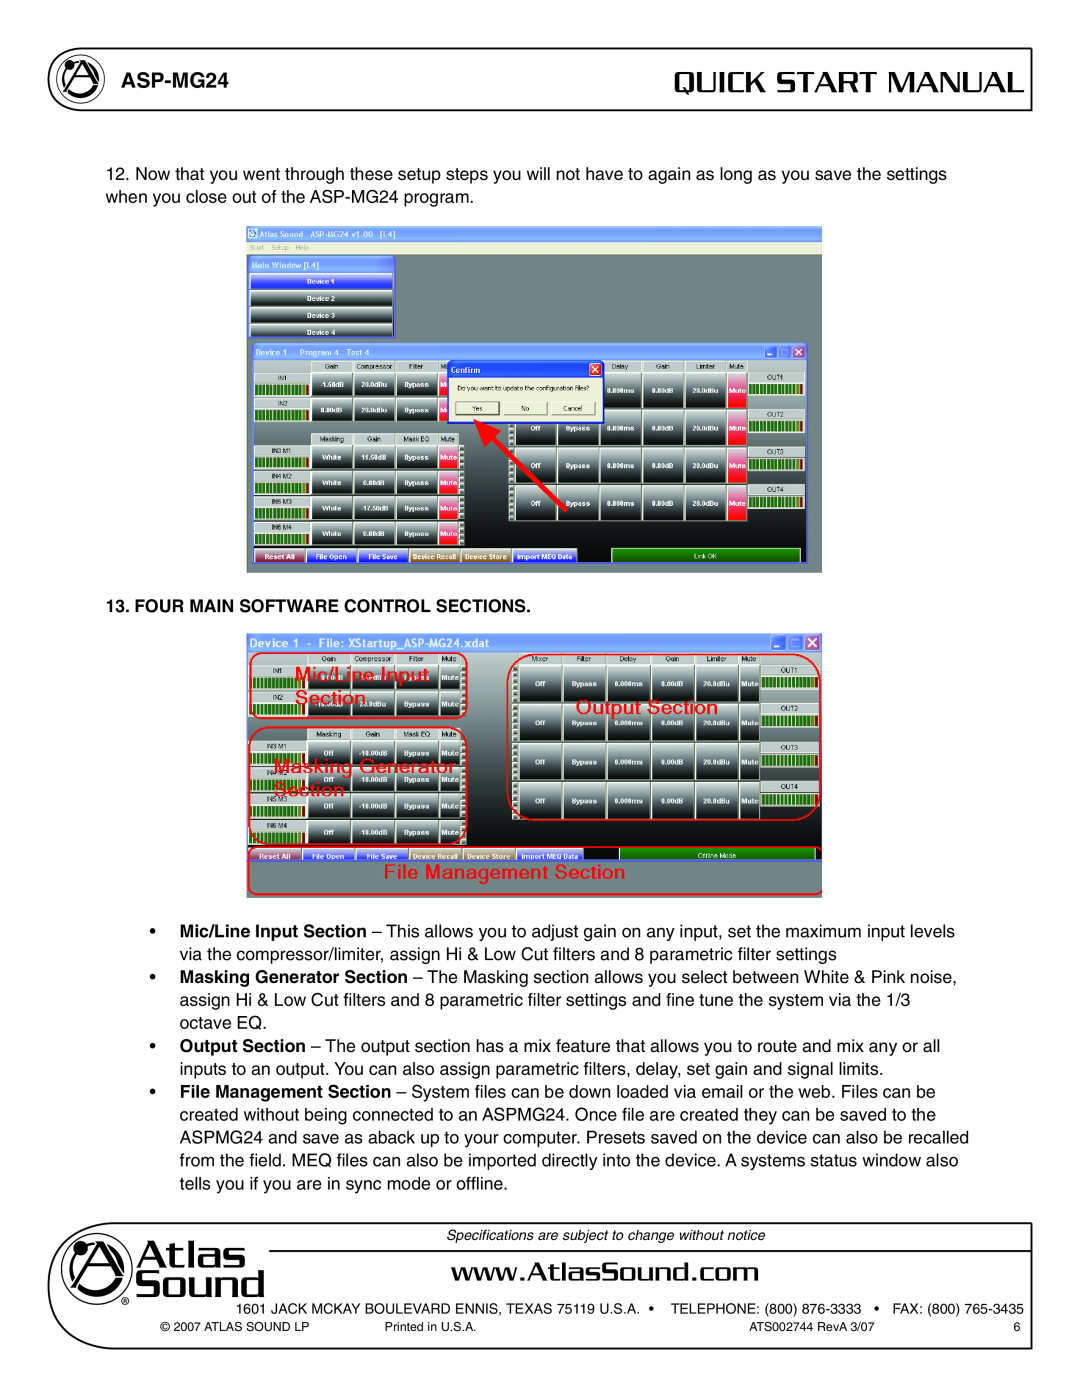 Atlas Sound ASP-MG24 Four Main Software Control Sections, Quick Start Manual, Atlas Sound Lp, ATS002744 RevA 3/07 